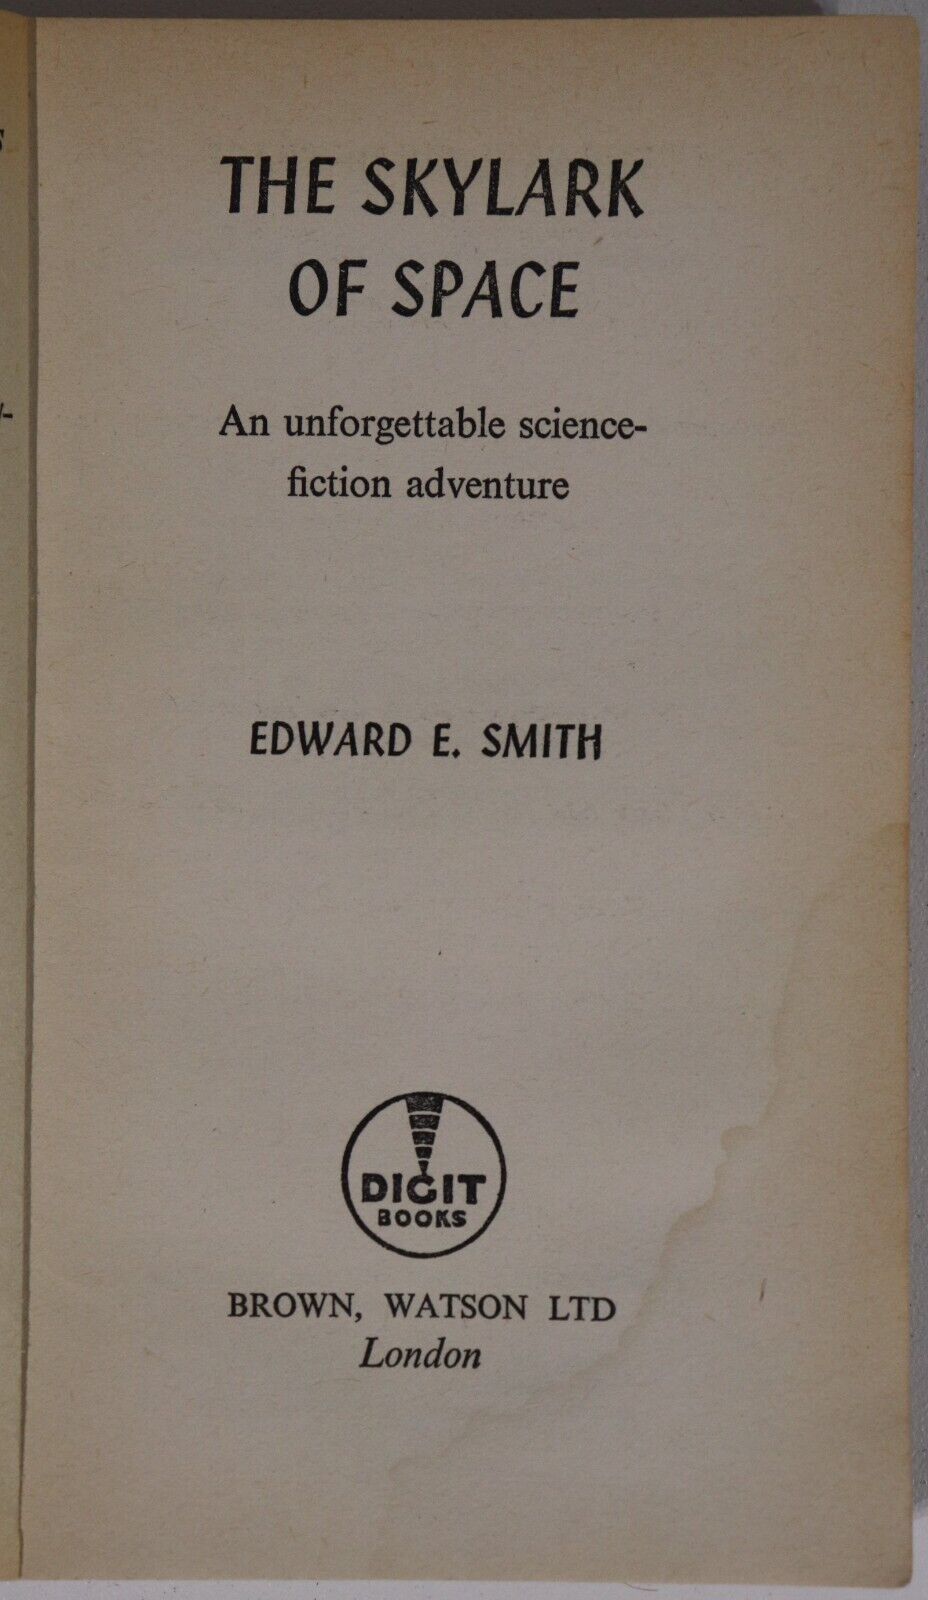 The Skylark Of Space by Edward E. Smith - 1958 - Vintage Science Fiction Book - 0